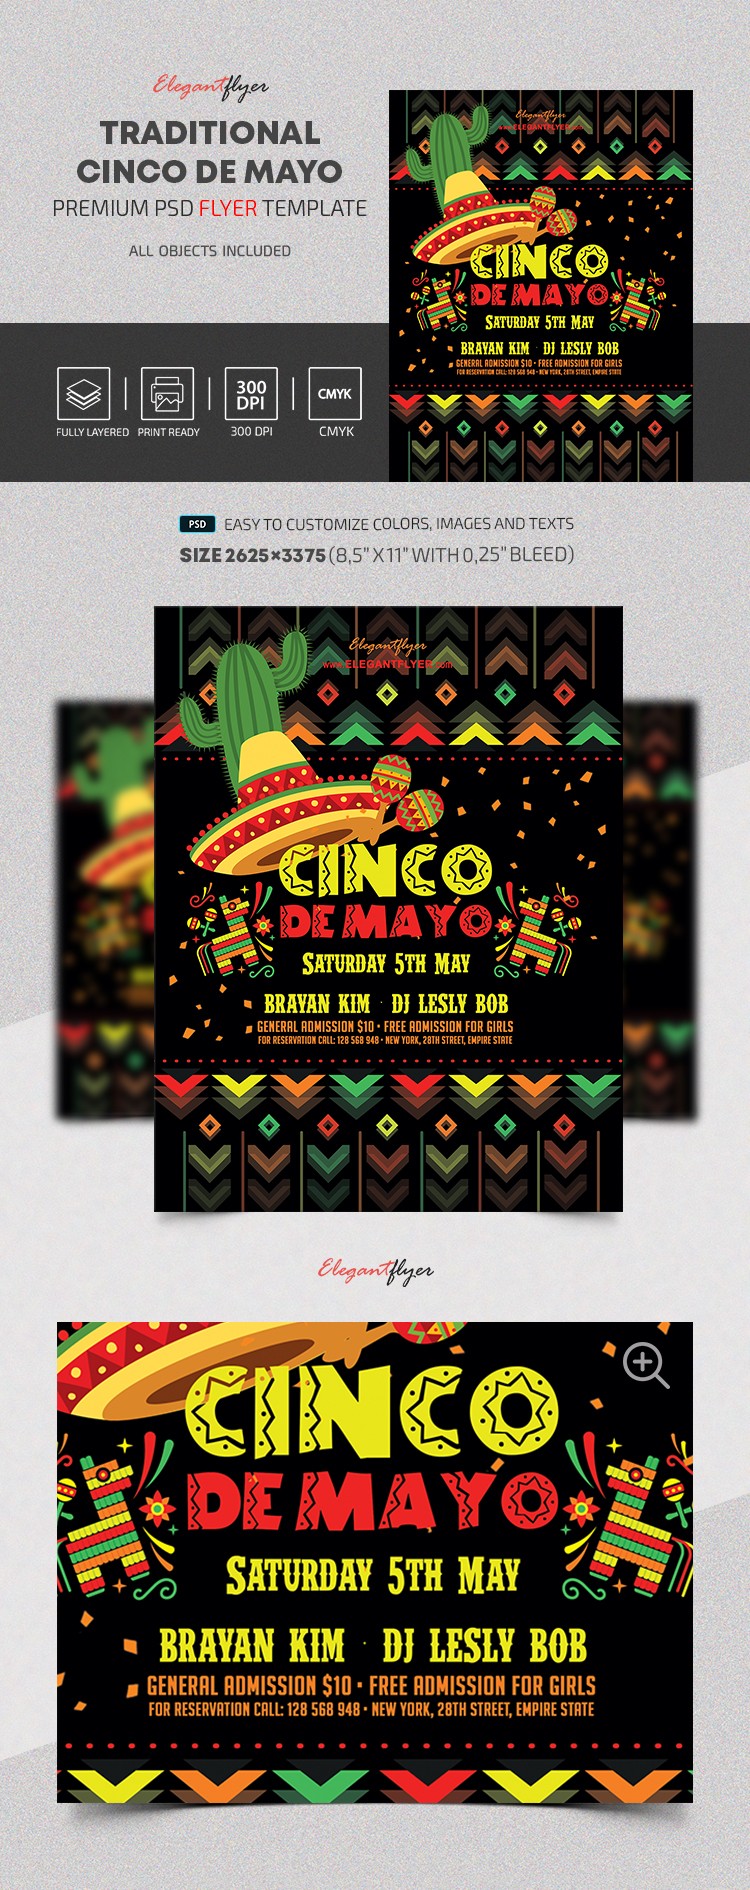 Cinco de Mayo traditionnel V6 by ElegantFlyer